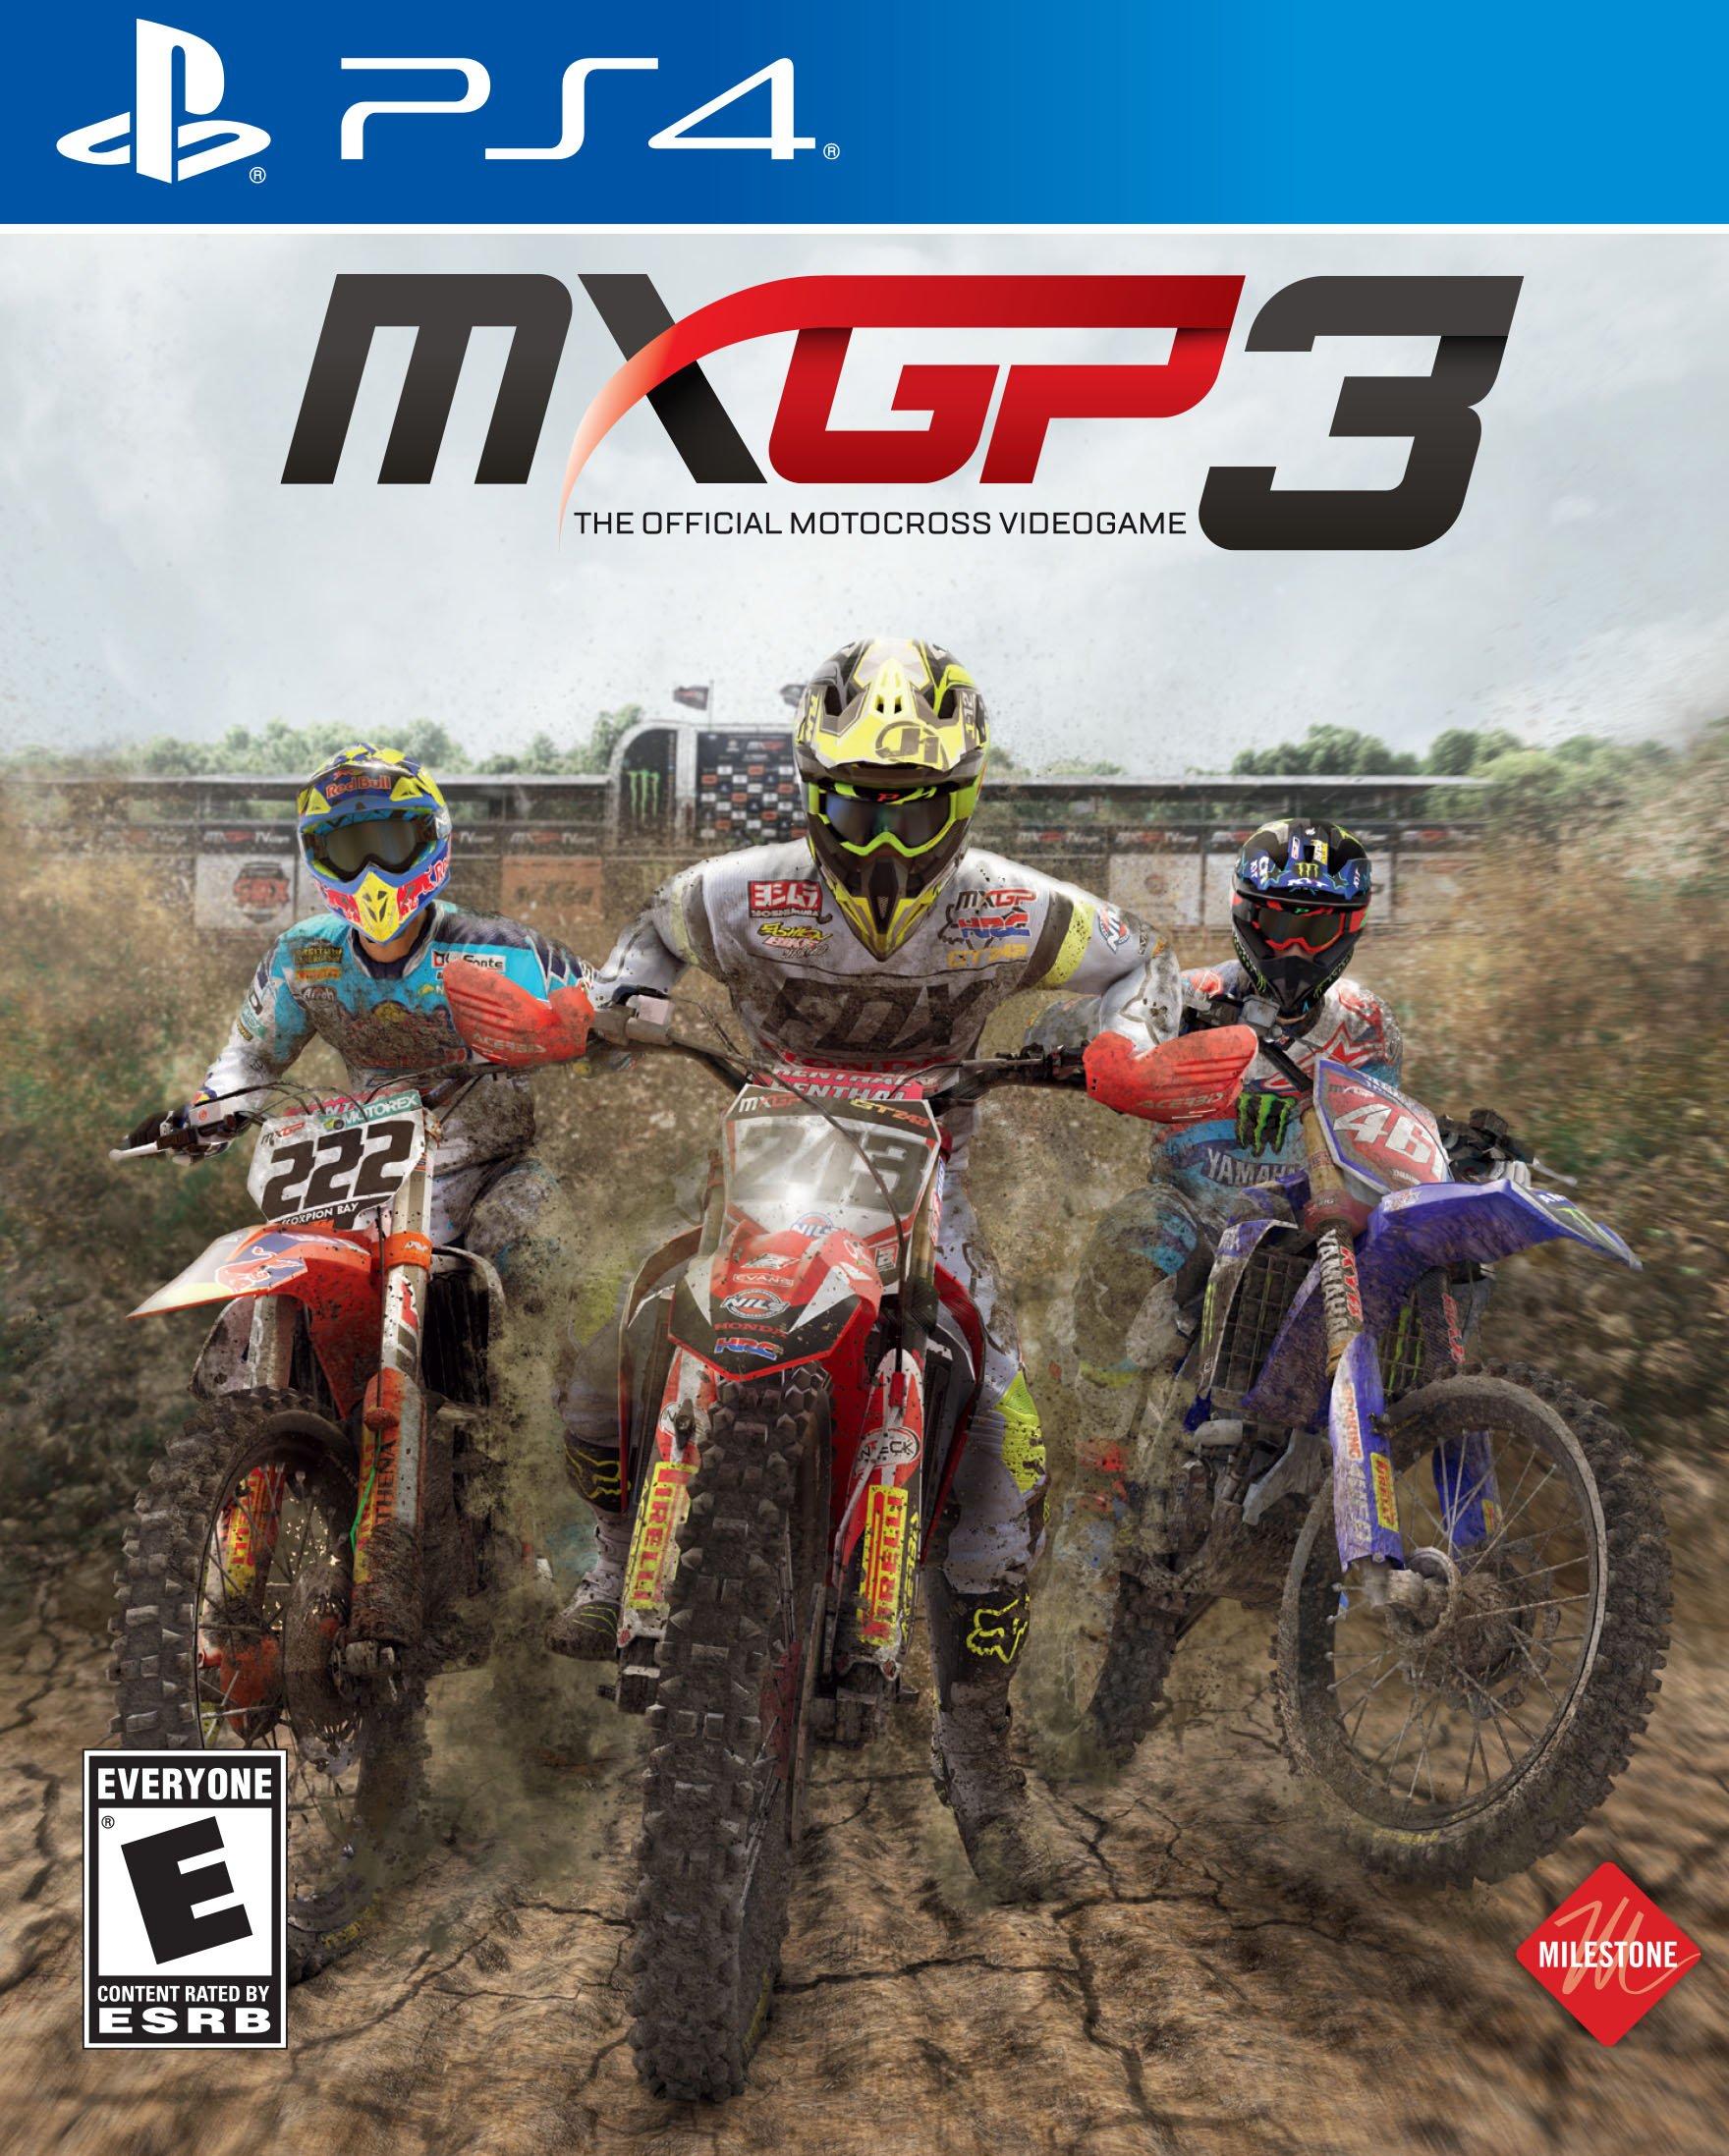 Motocross videogame. Игра мотокросс MXGP. MXGP 3 Nintendo Switch. Mxgp3 - the Official Motocross videogame. MXGP: the Official....